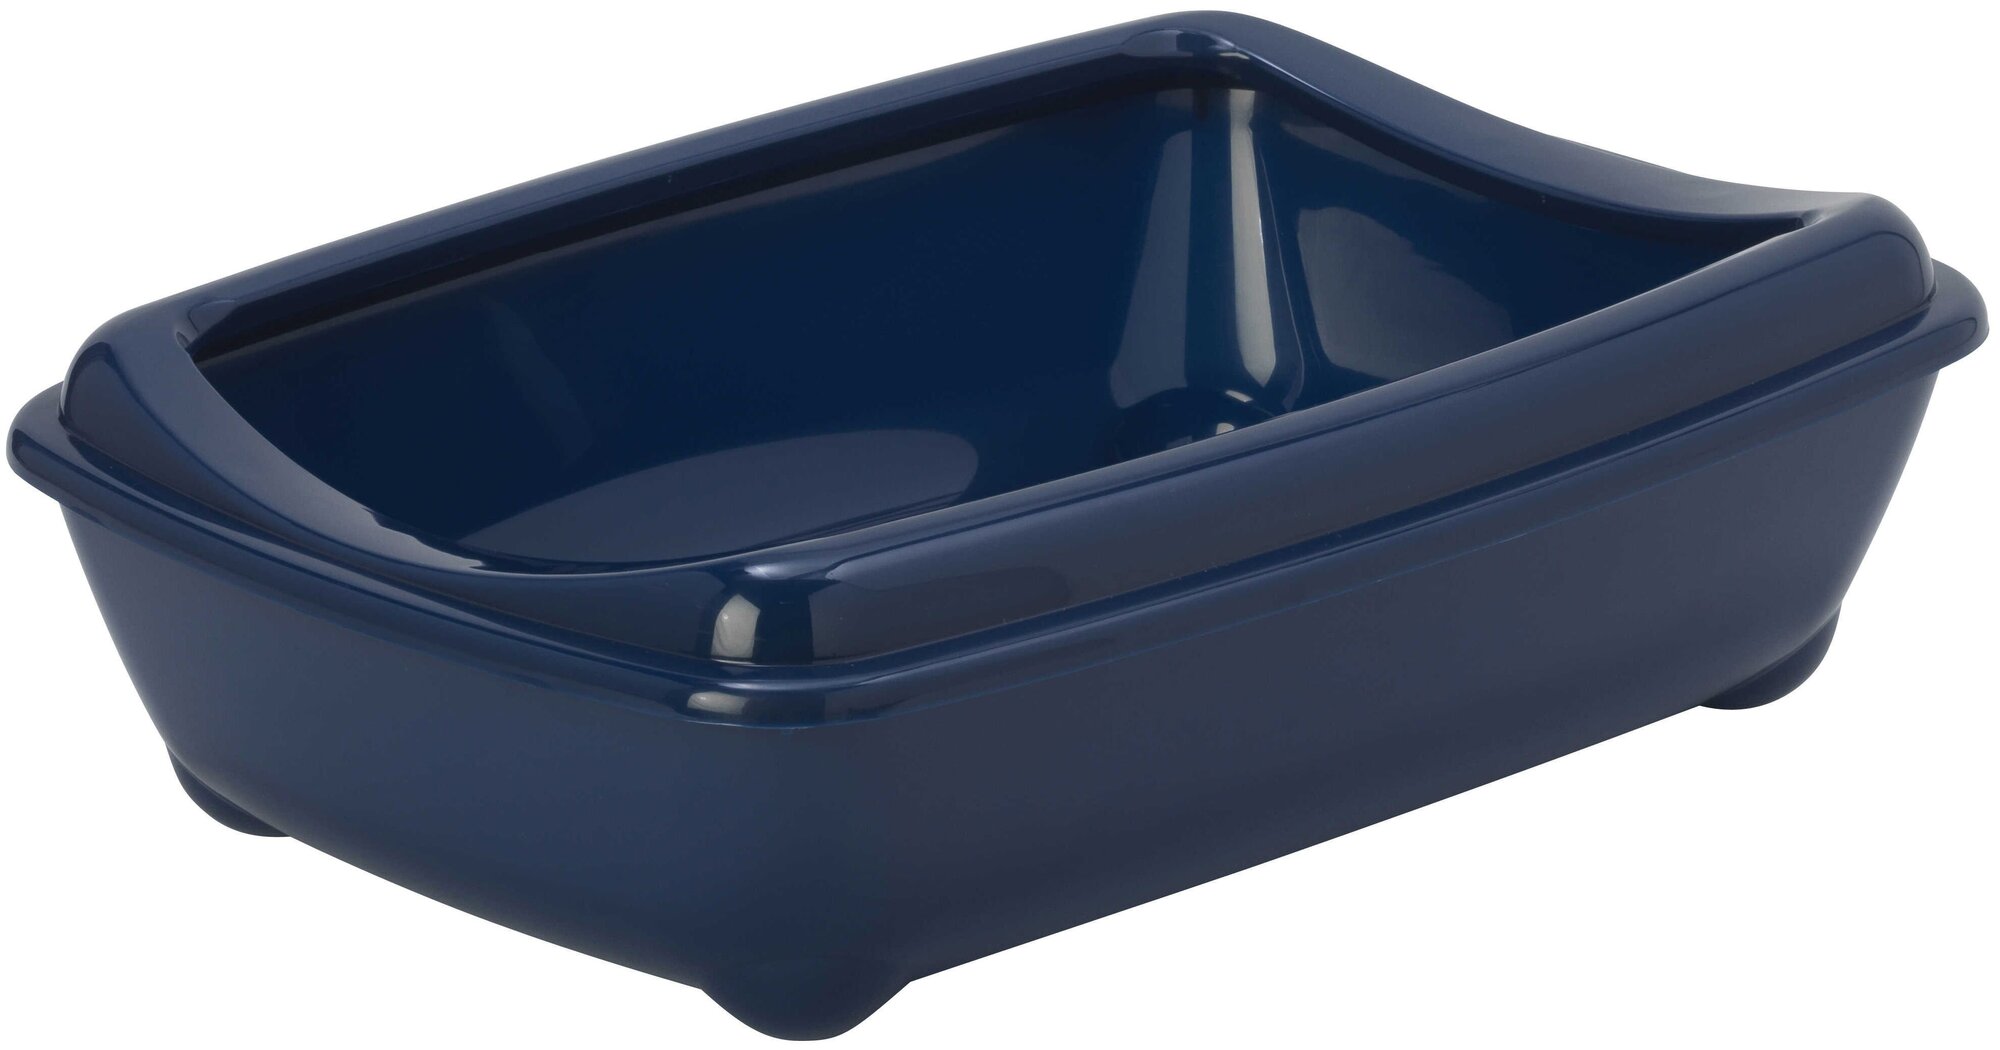 Moderna Открытый туалет-лоток arist-o-tray, цвет черники, 42х30х12 см - фотография № 1